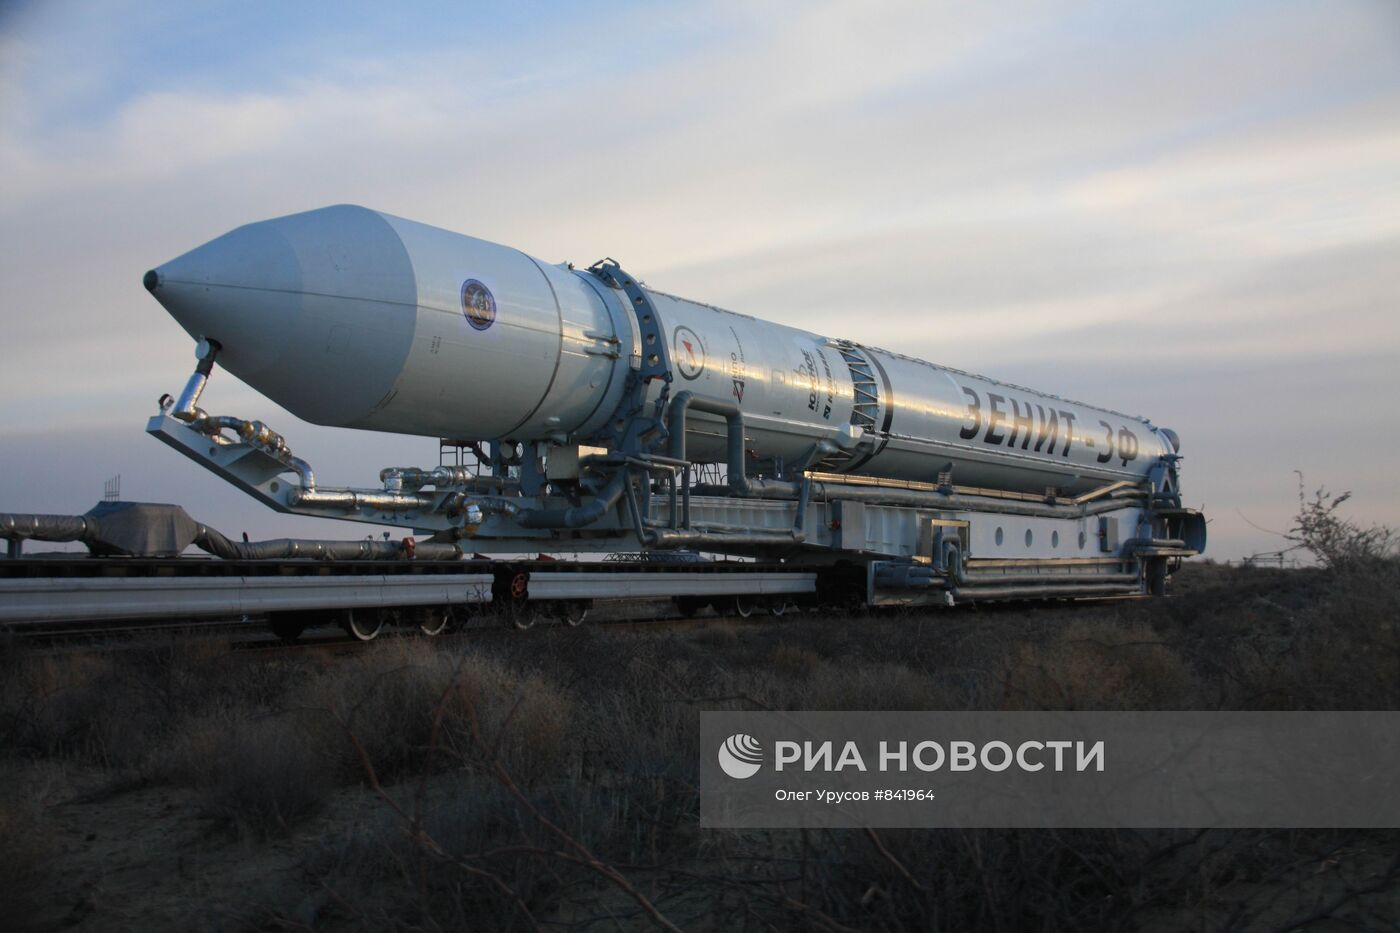 Установка ракеты-носителя "Зенит-2SБ" на космодроме "Байконур"